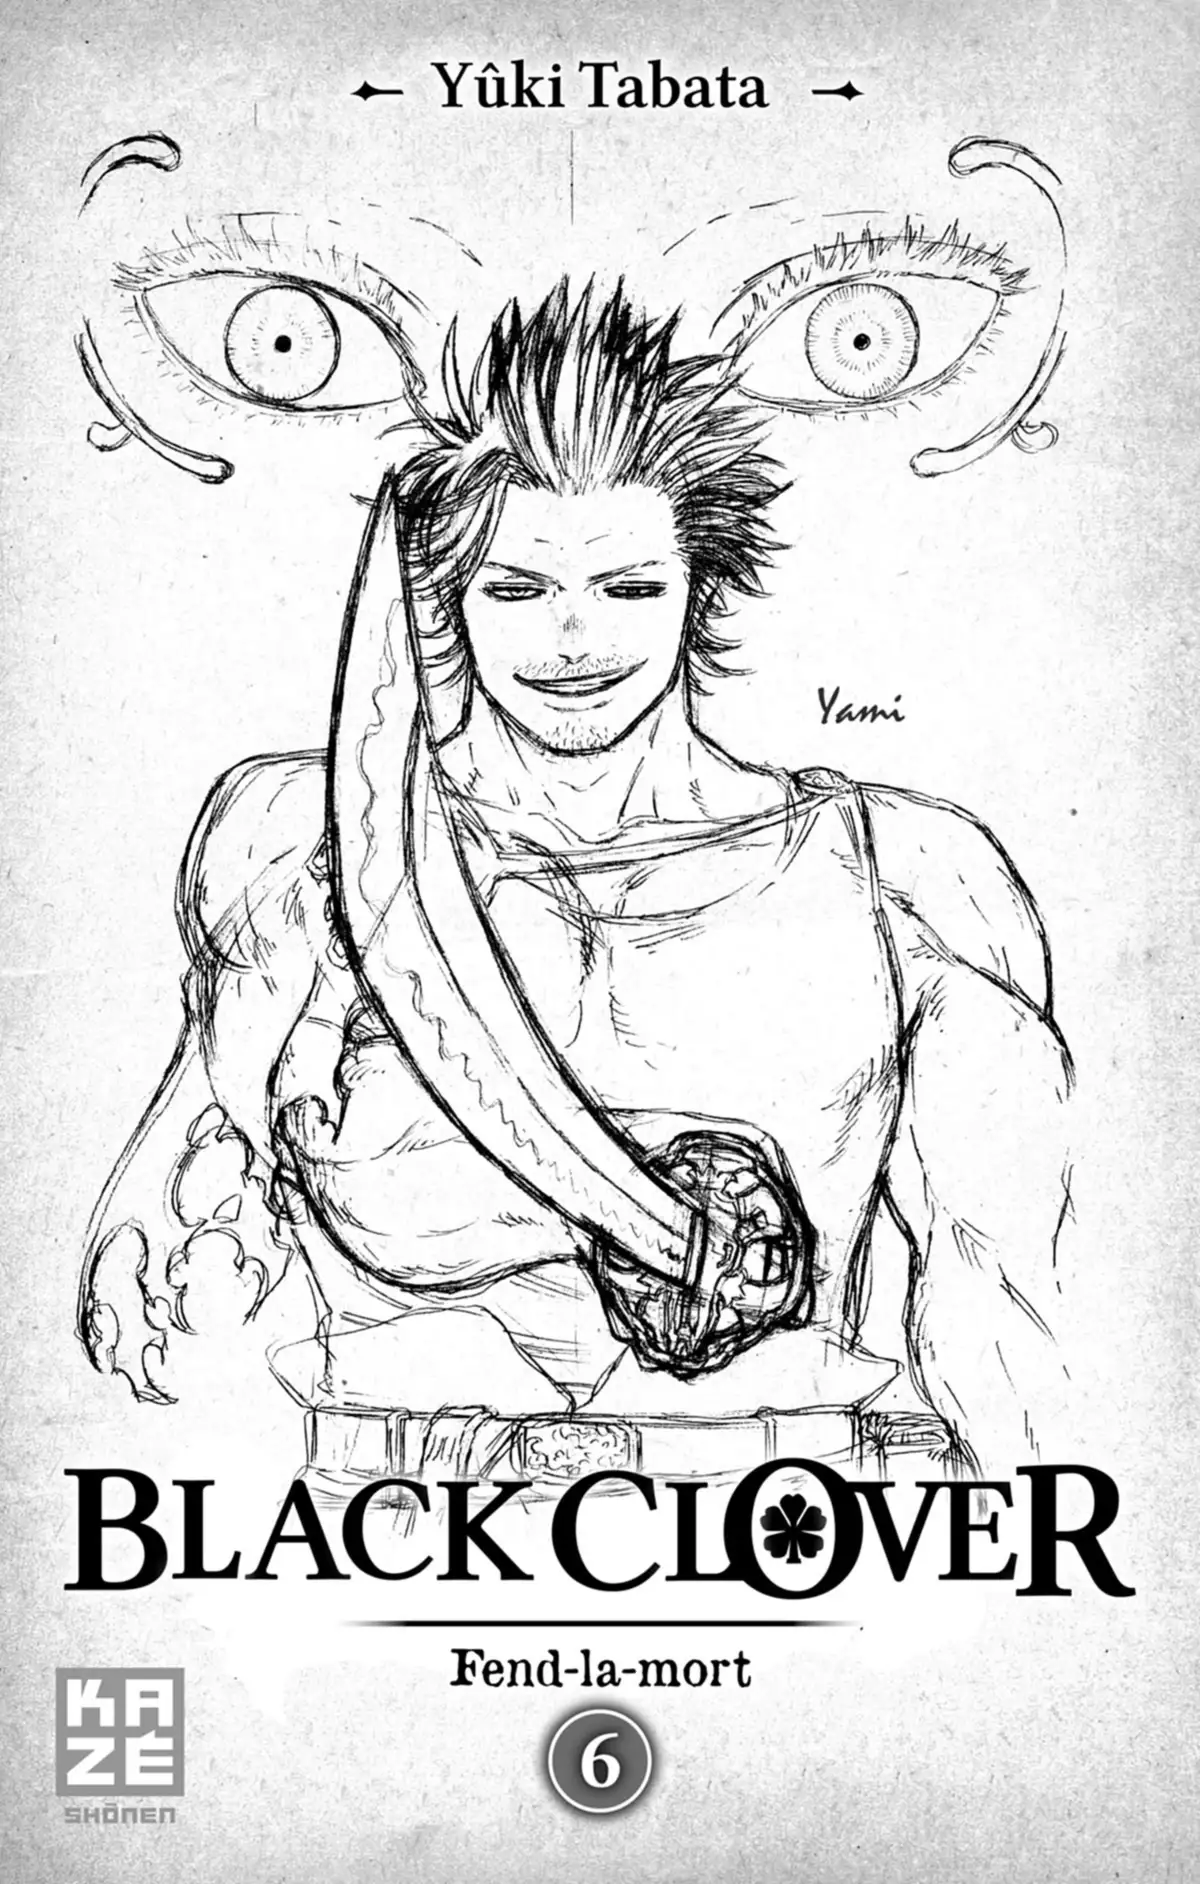 Black Clover Volume 6 page 2